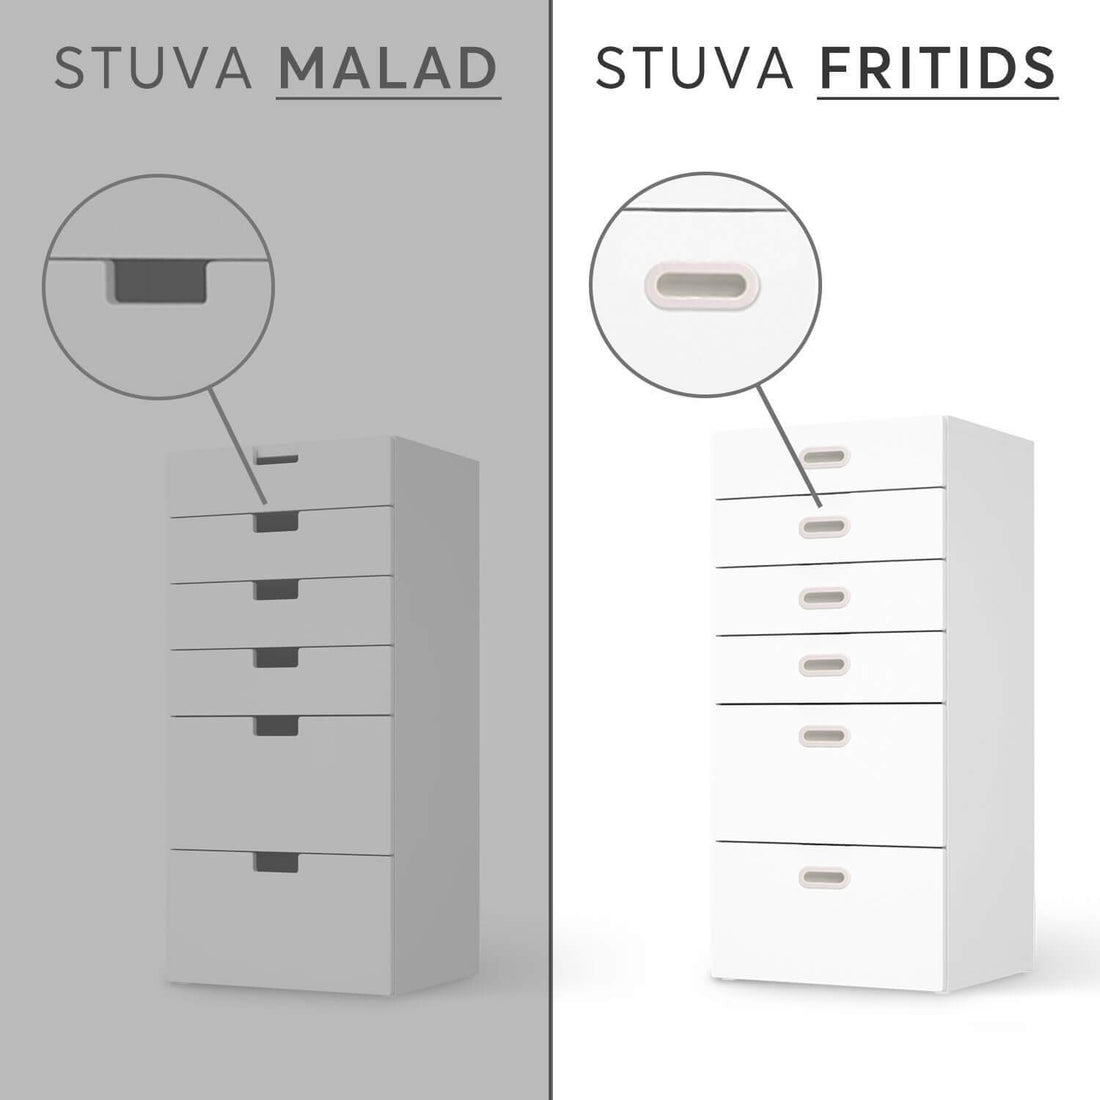 Vergleich IKEA Stuva Fritids / Malad - Flying Animals